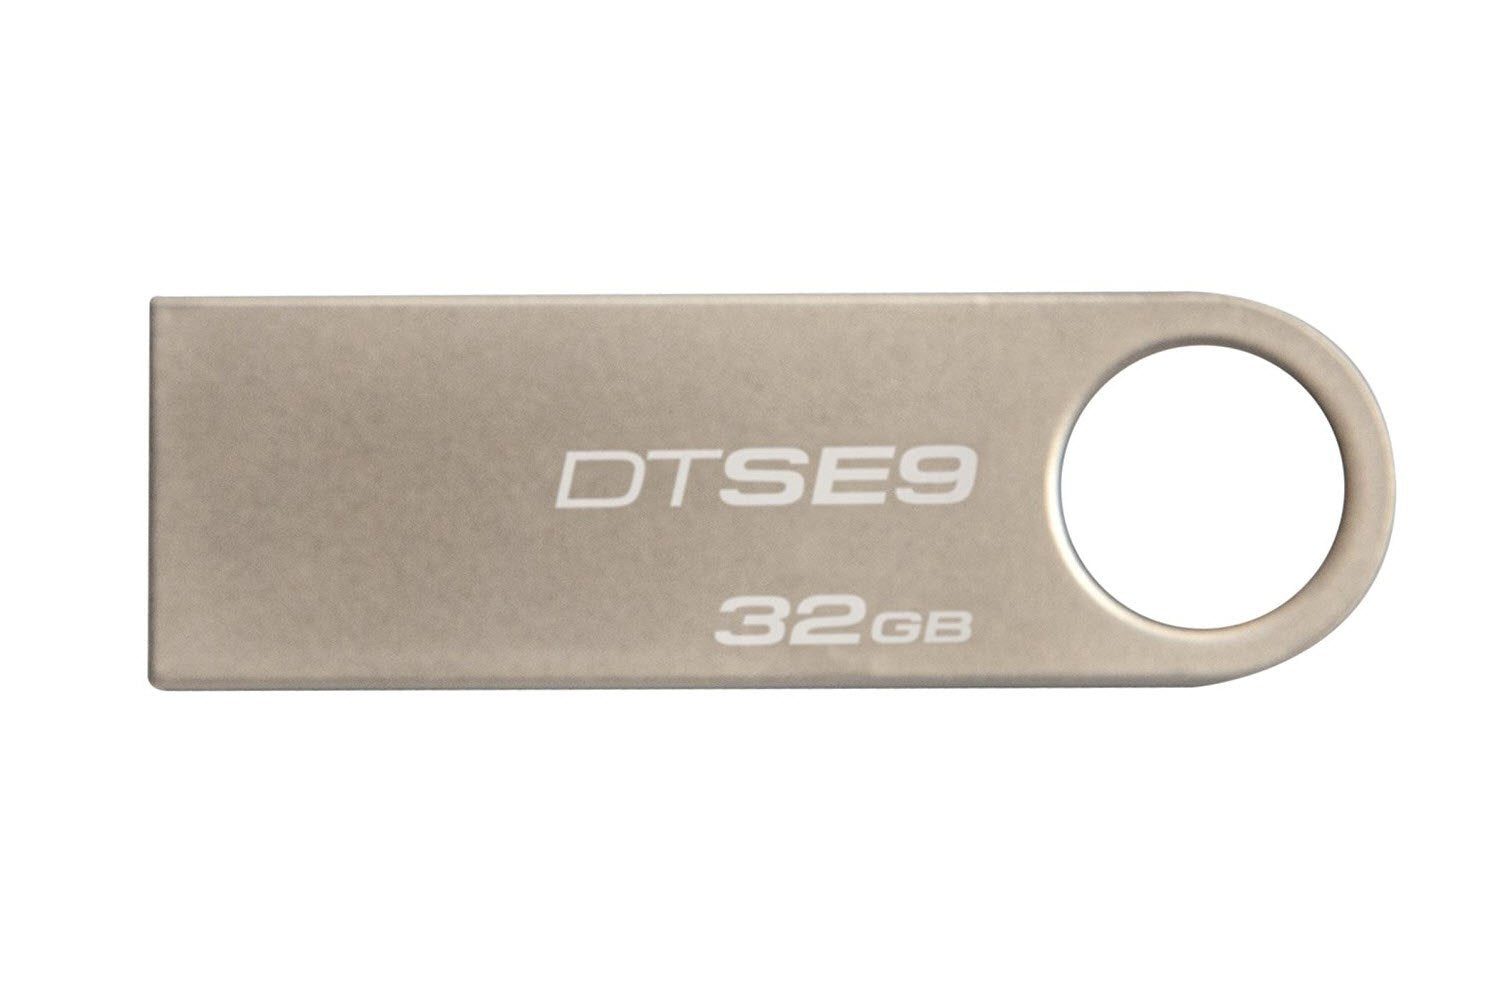 Kingston Digital DataTraveler SE9 32GB USB 2.0 Flash Drive, Silver